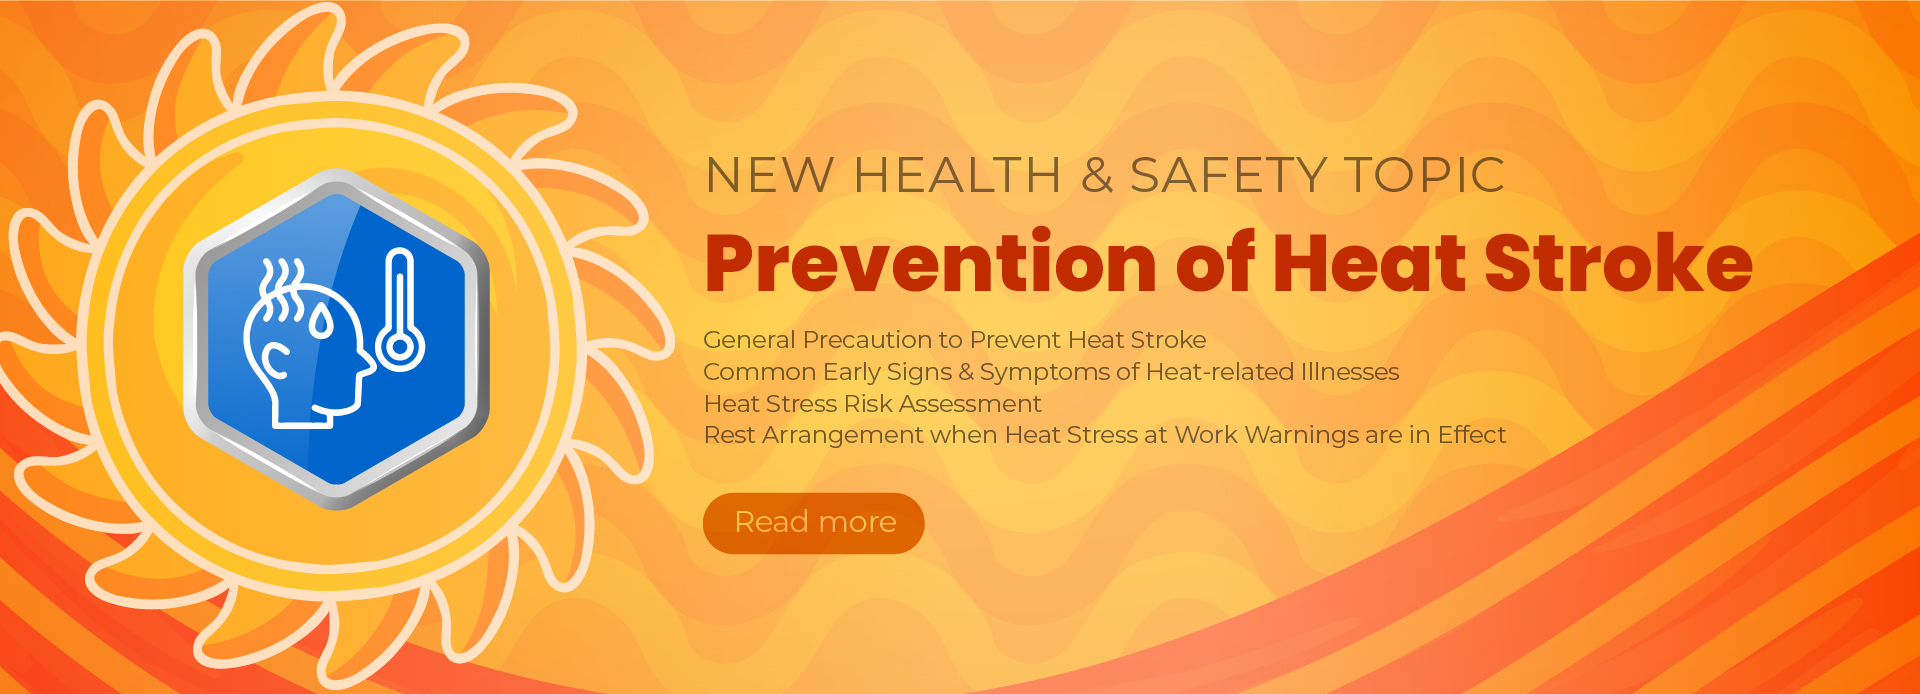 Prevention of Heat Stroke